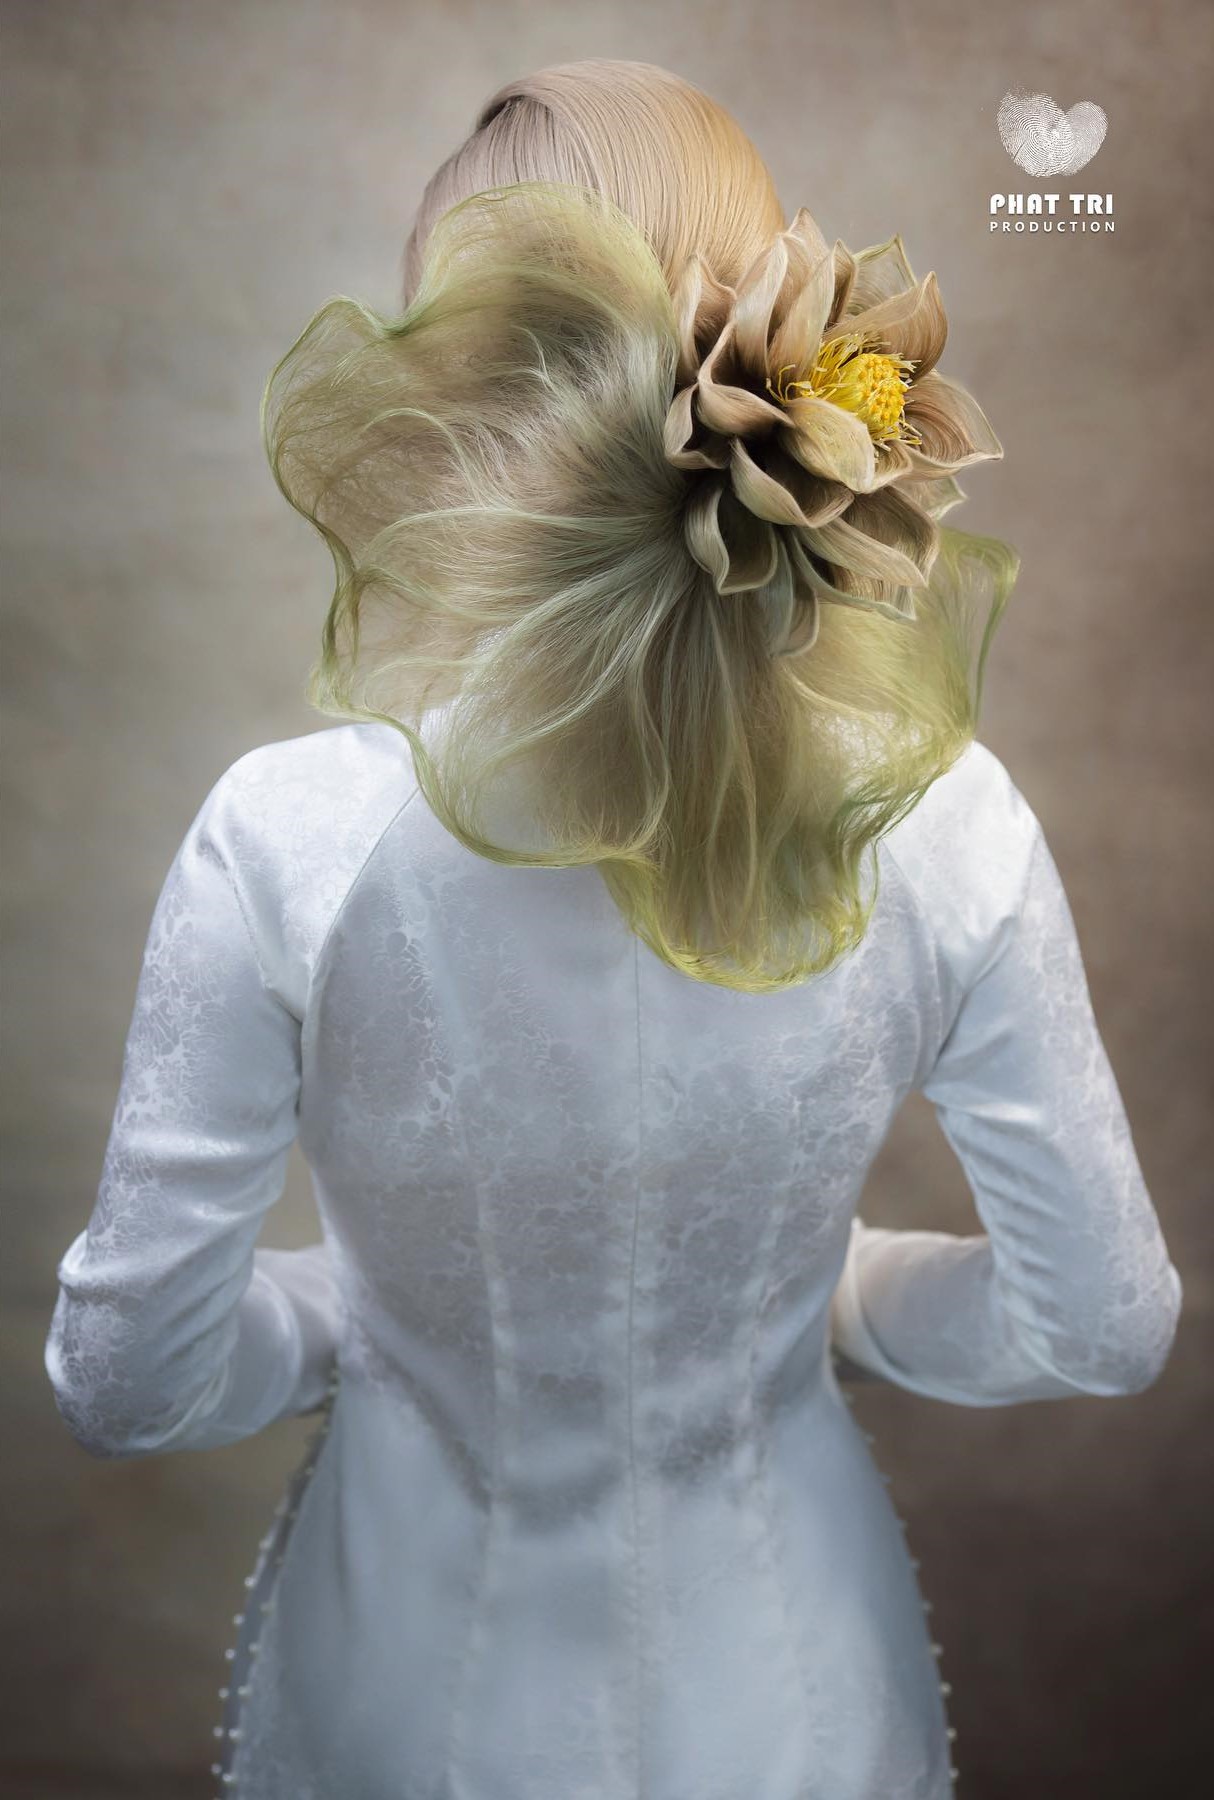 Beautiful Hairstyles That Look Like Ornate Flowers By Nguyen Phat Tri (5)